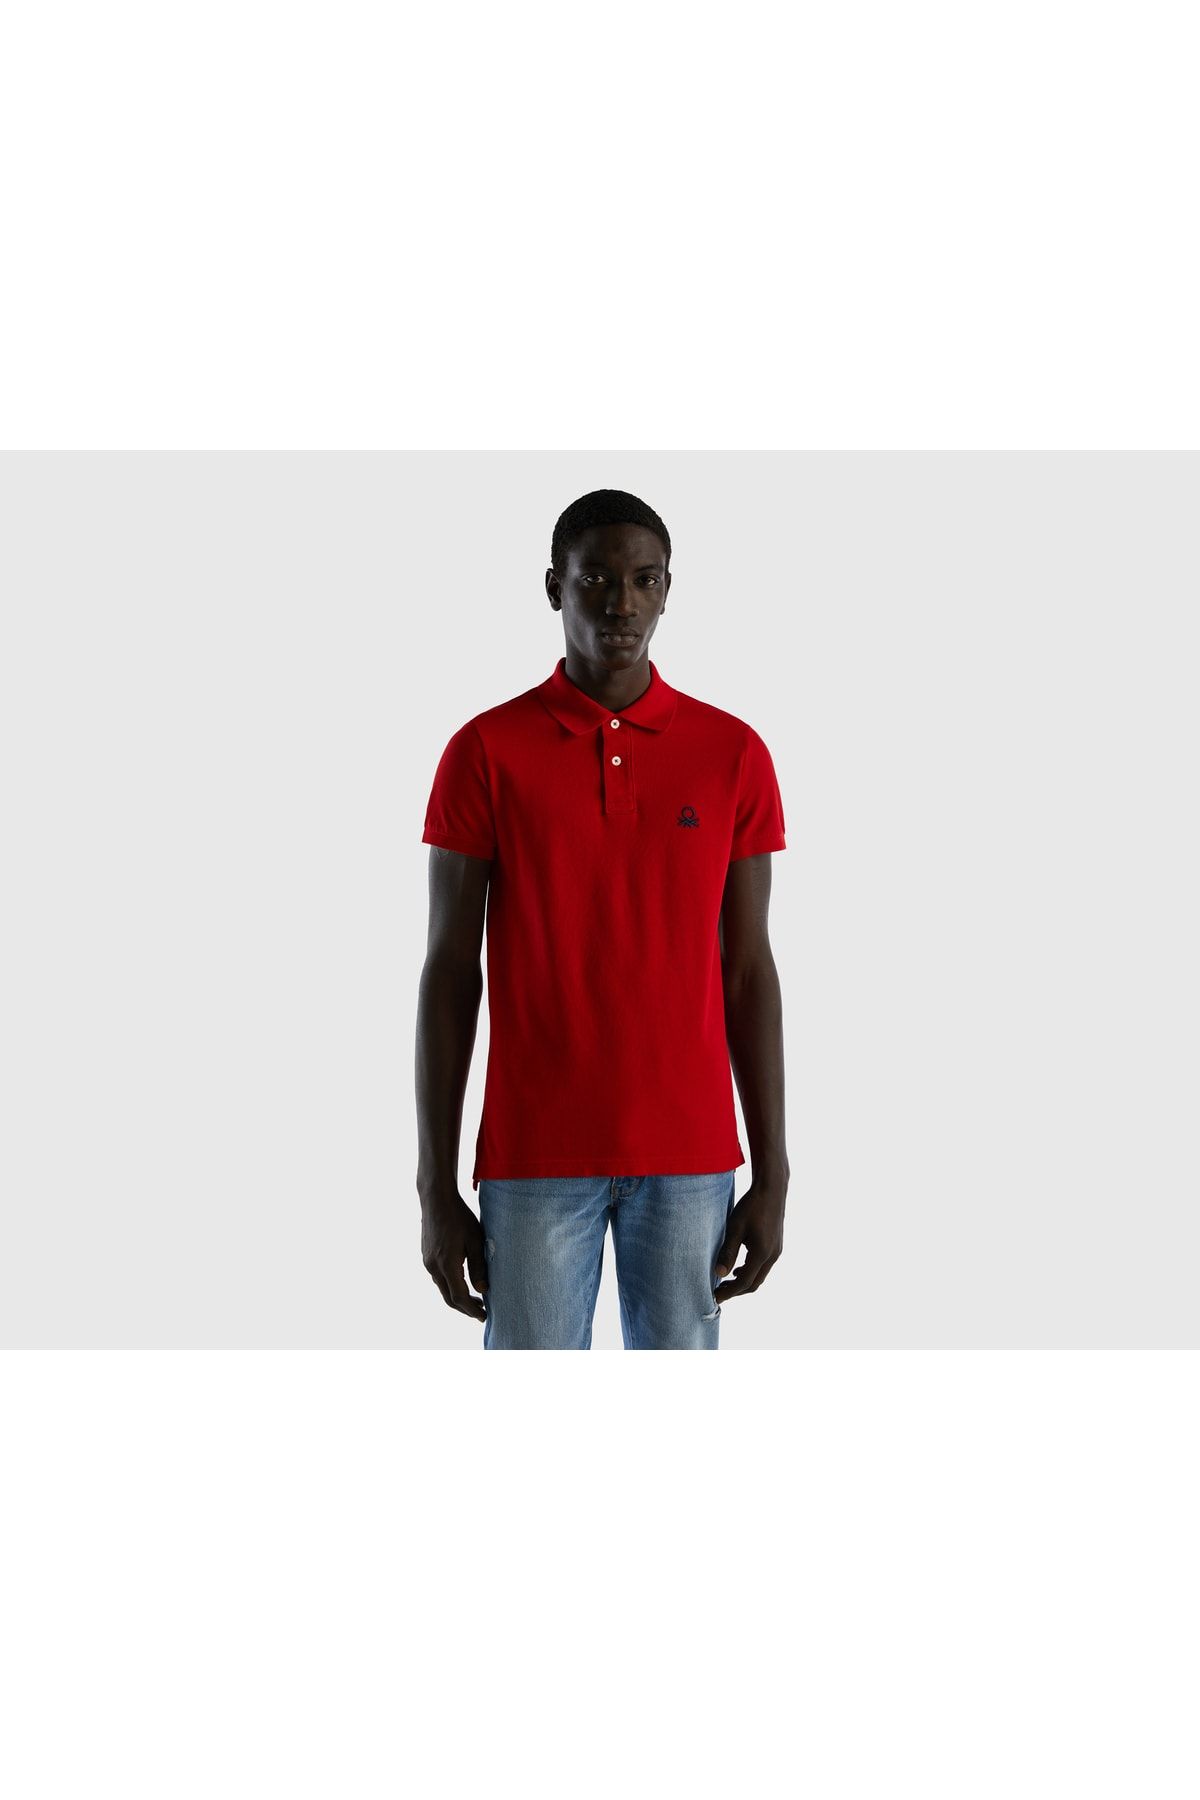 United Colors of Benetton Erkek Kırmızı Slim Fit Kısa Kollu Polo Tshirt Kırmızı